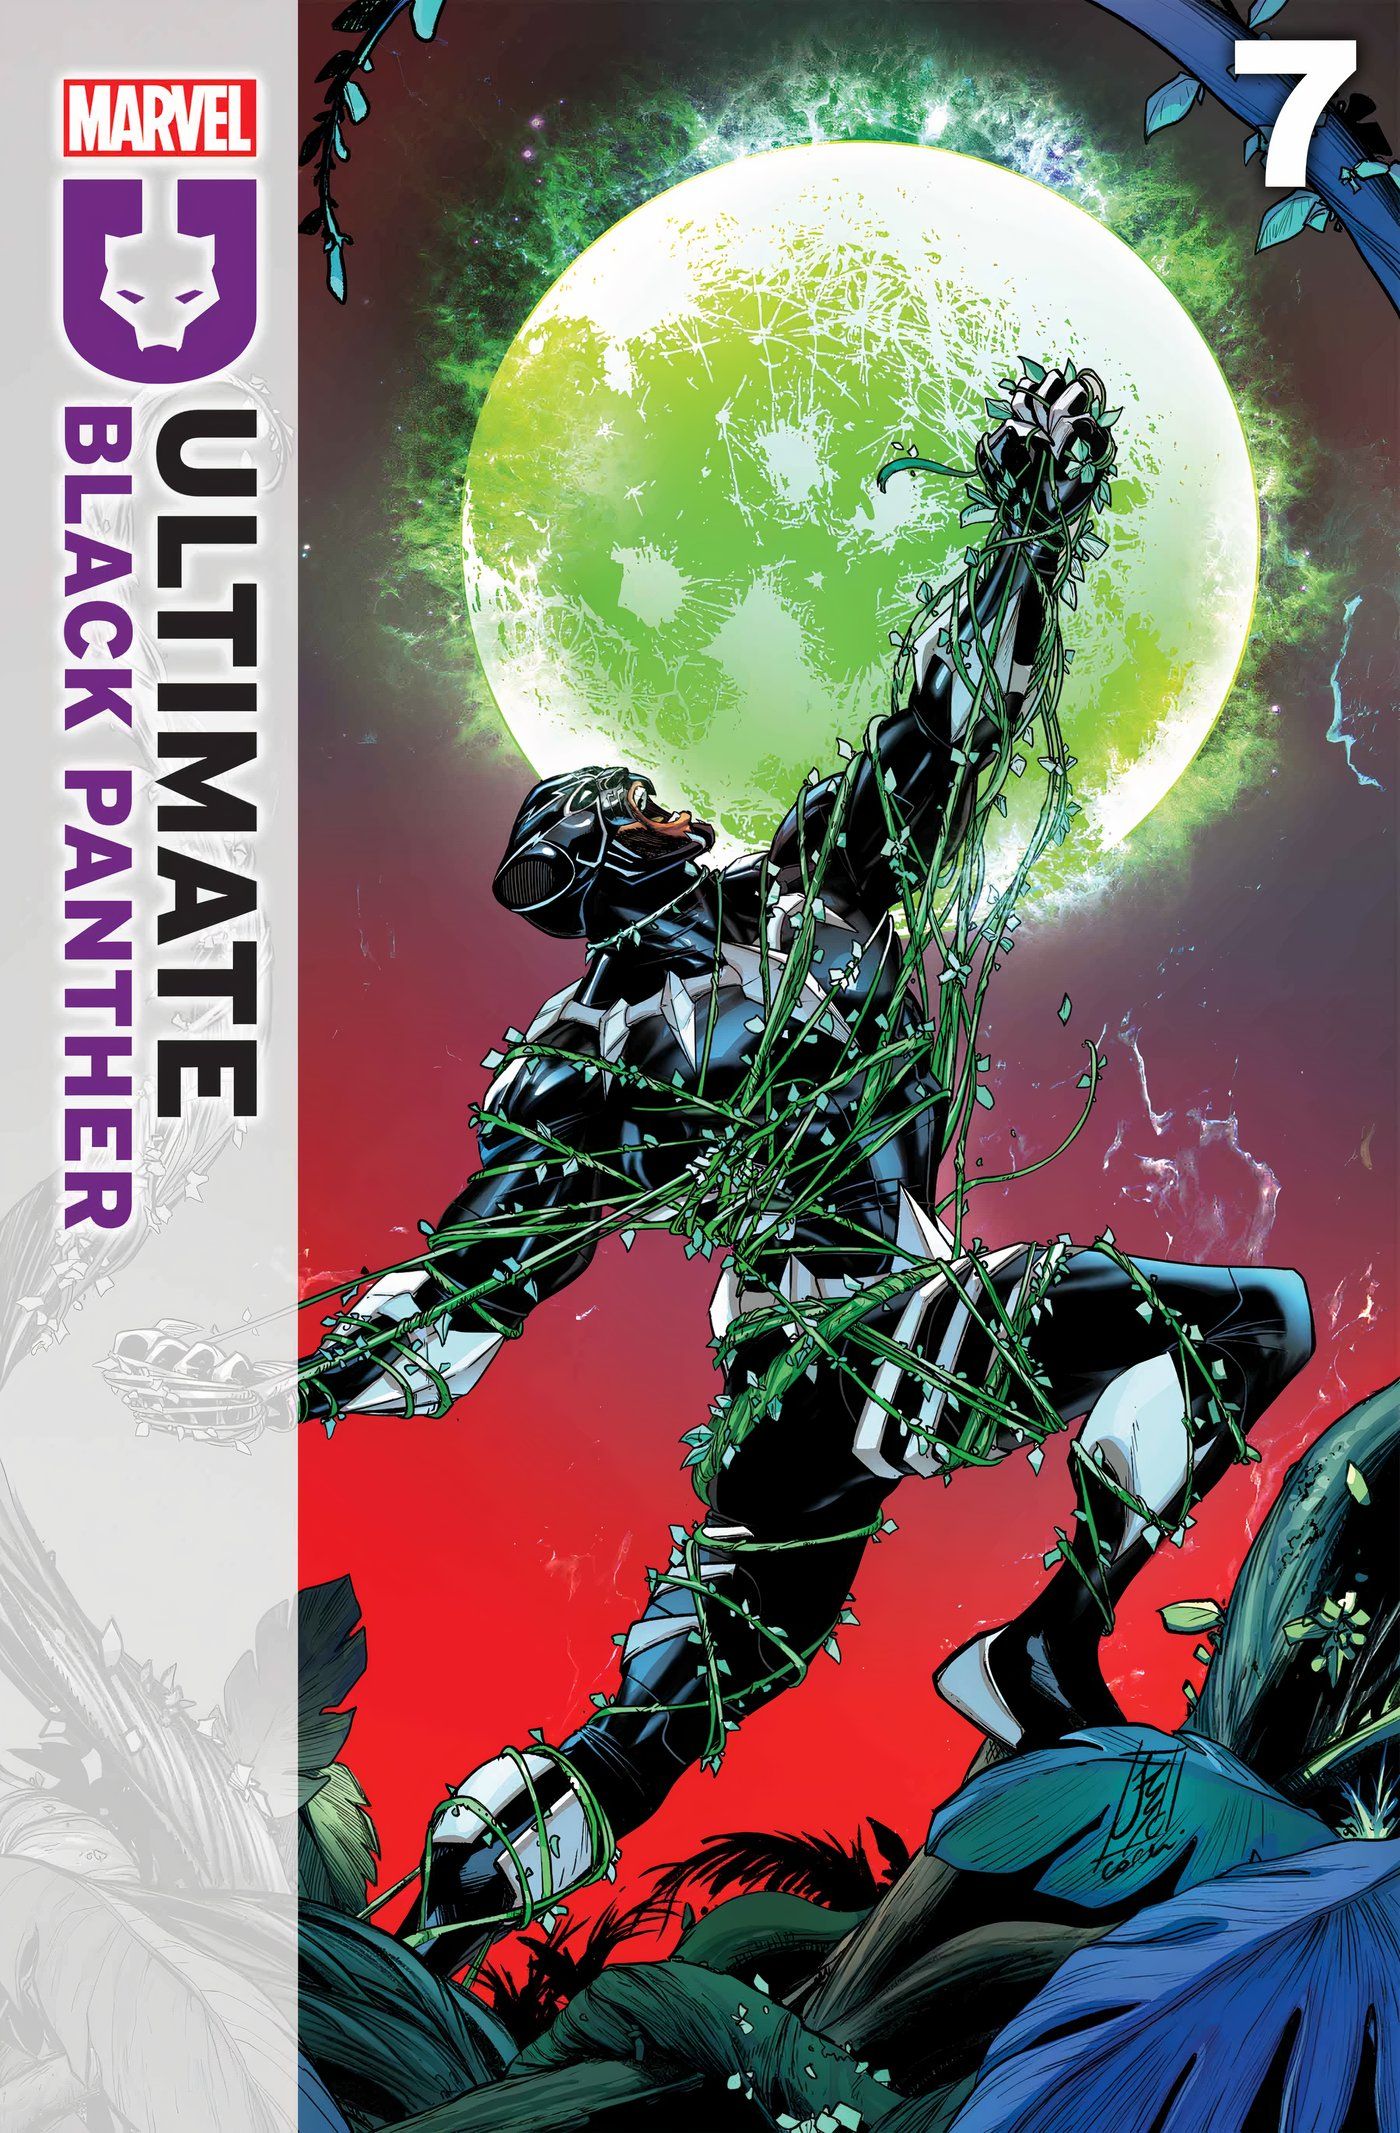 Capa Ultimate Black Panther #7 apresentando Pantera Negra lutando contra plantas assassinas.